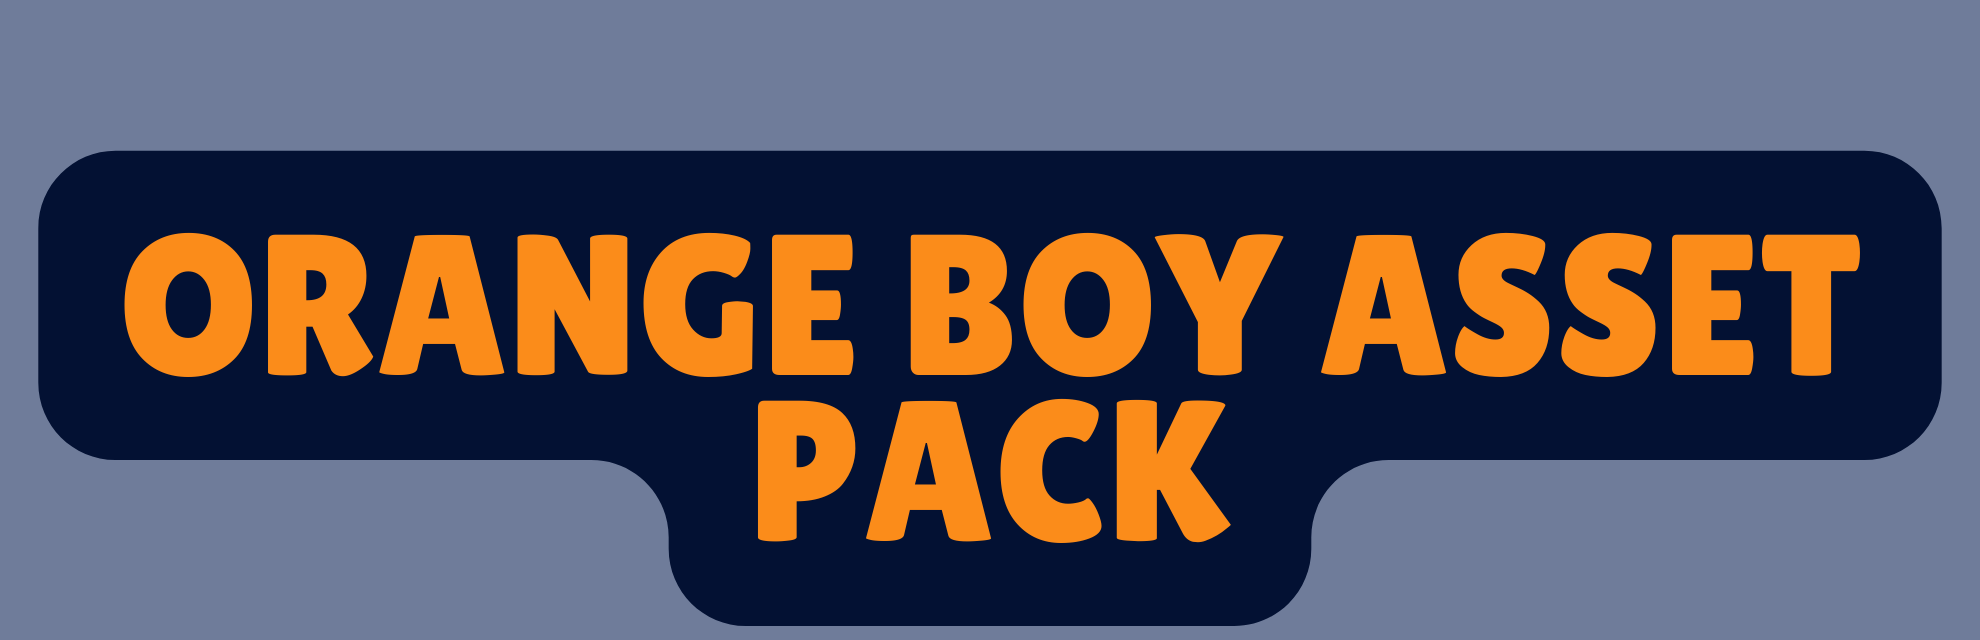 Orange Boy Asset Pack